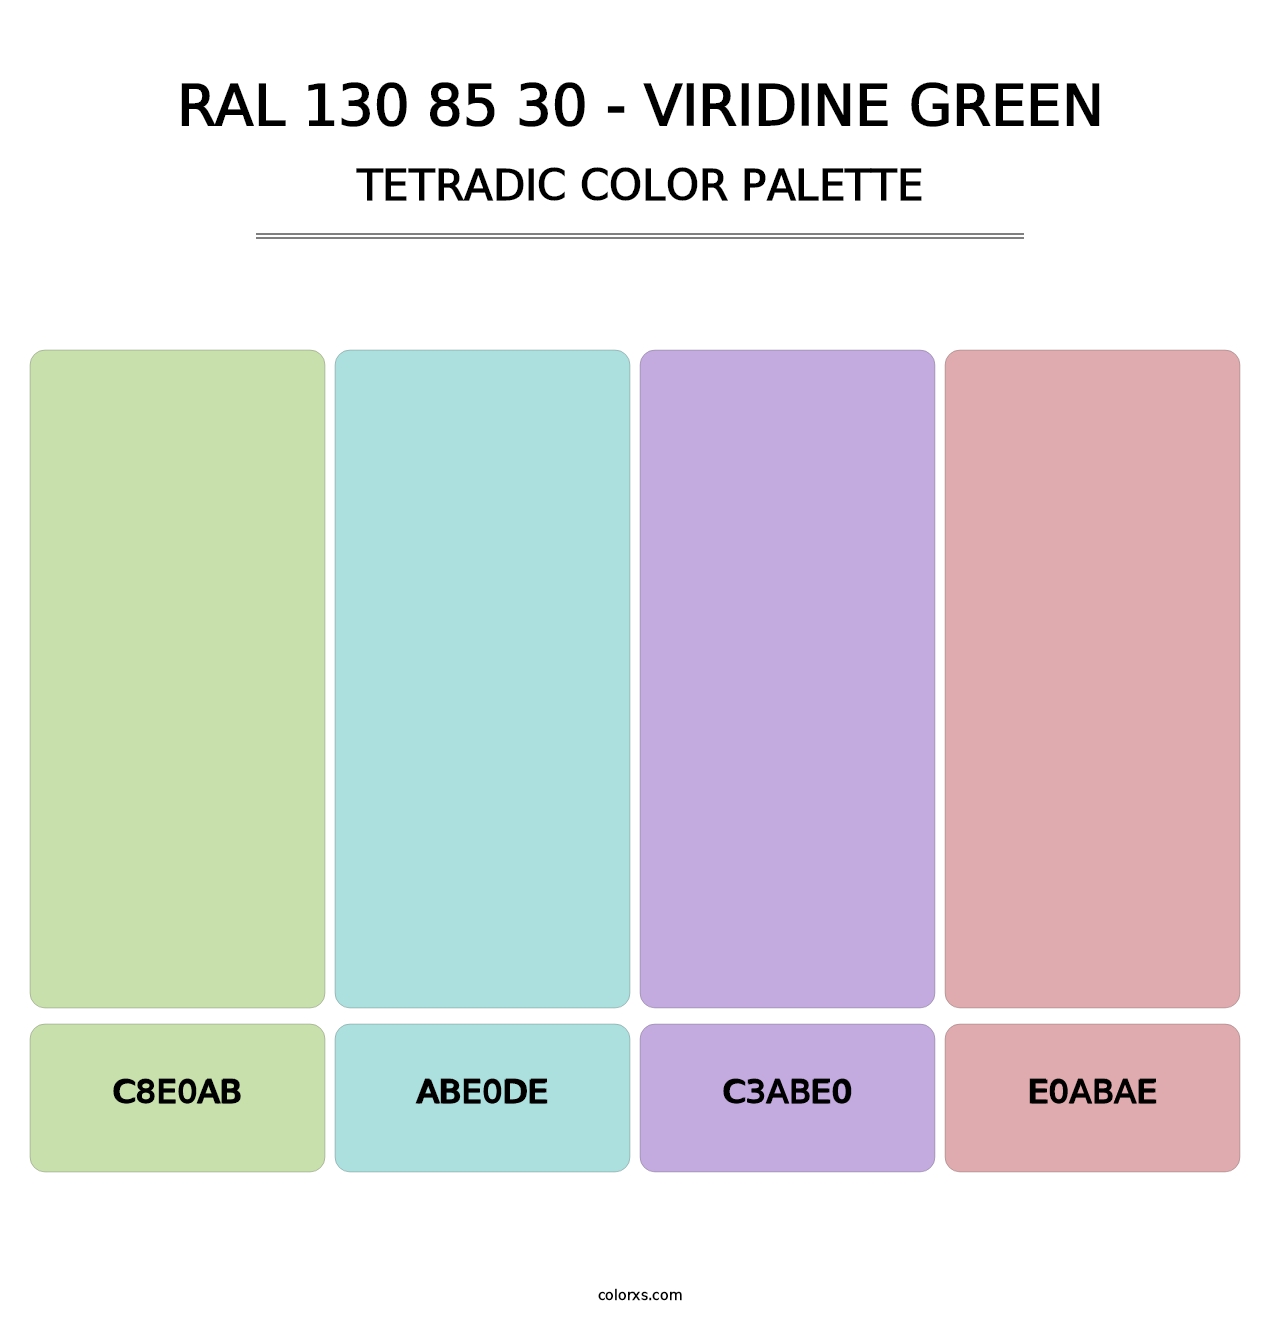 RAL 130 85 30 - Viridine Green - Tetradic Color Palette